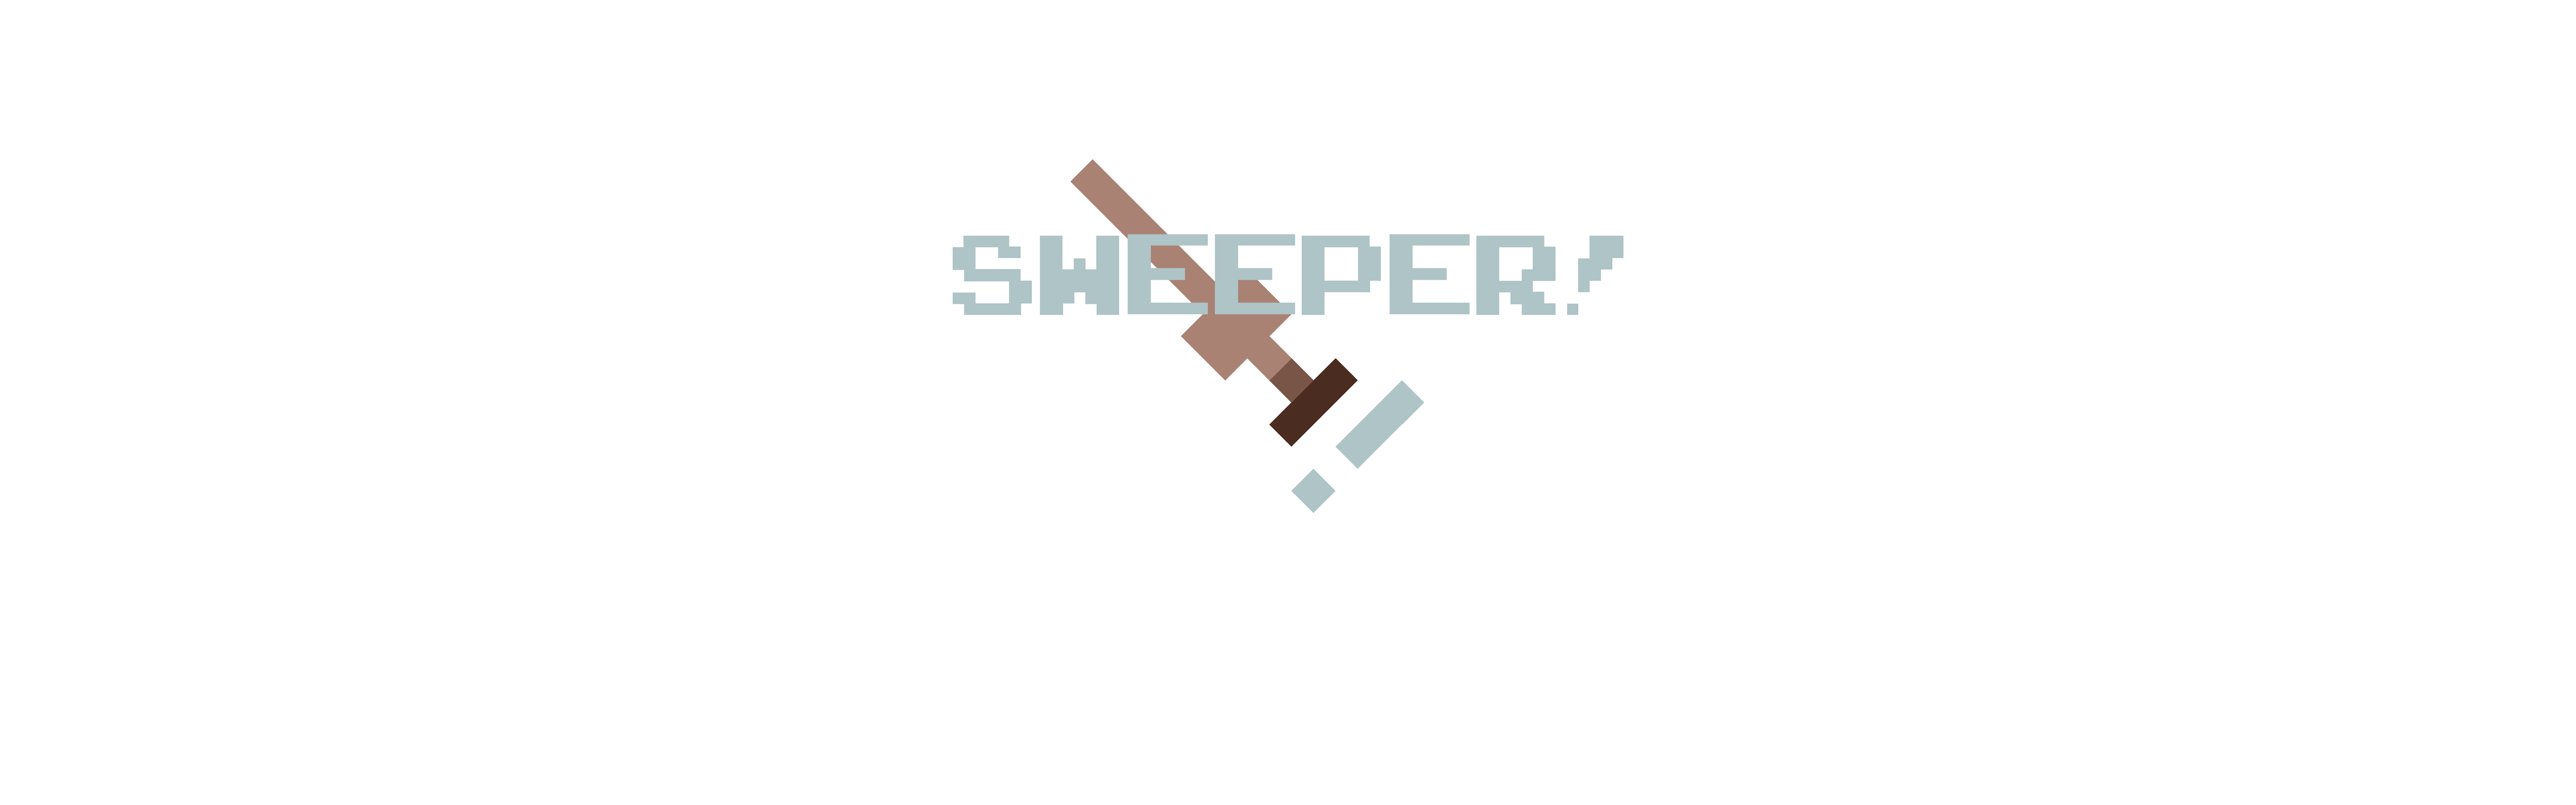 Sweeper!